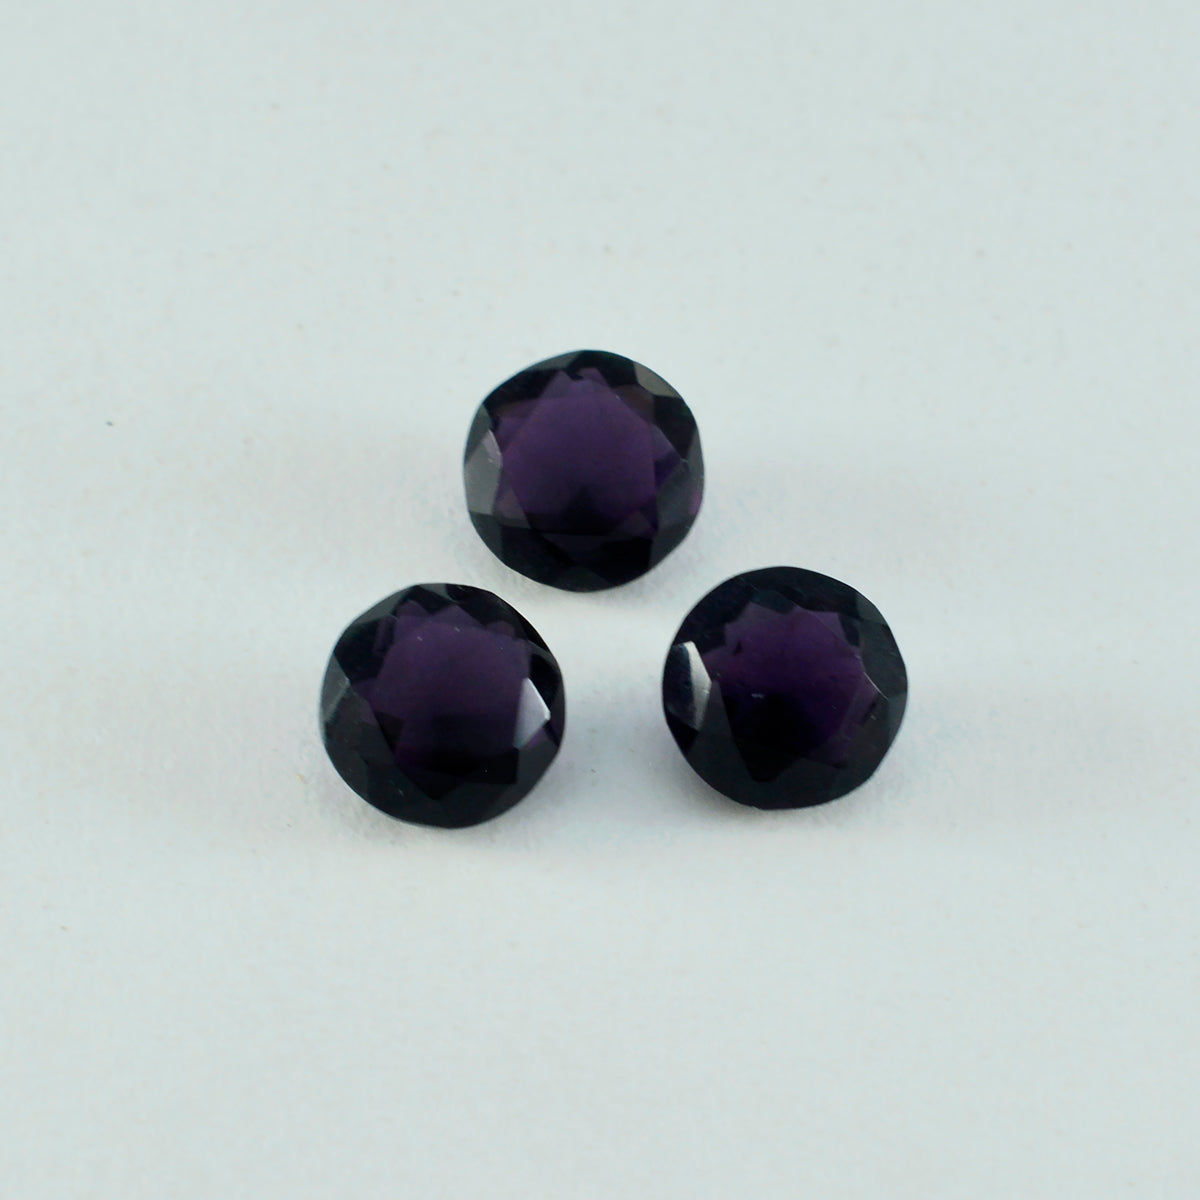 Riyogems 1 pieza de amatista púrpura CZ facetada 12x12mm forma redonda piedra de calidad asombrosa